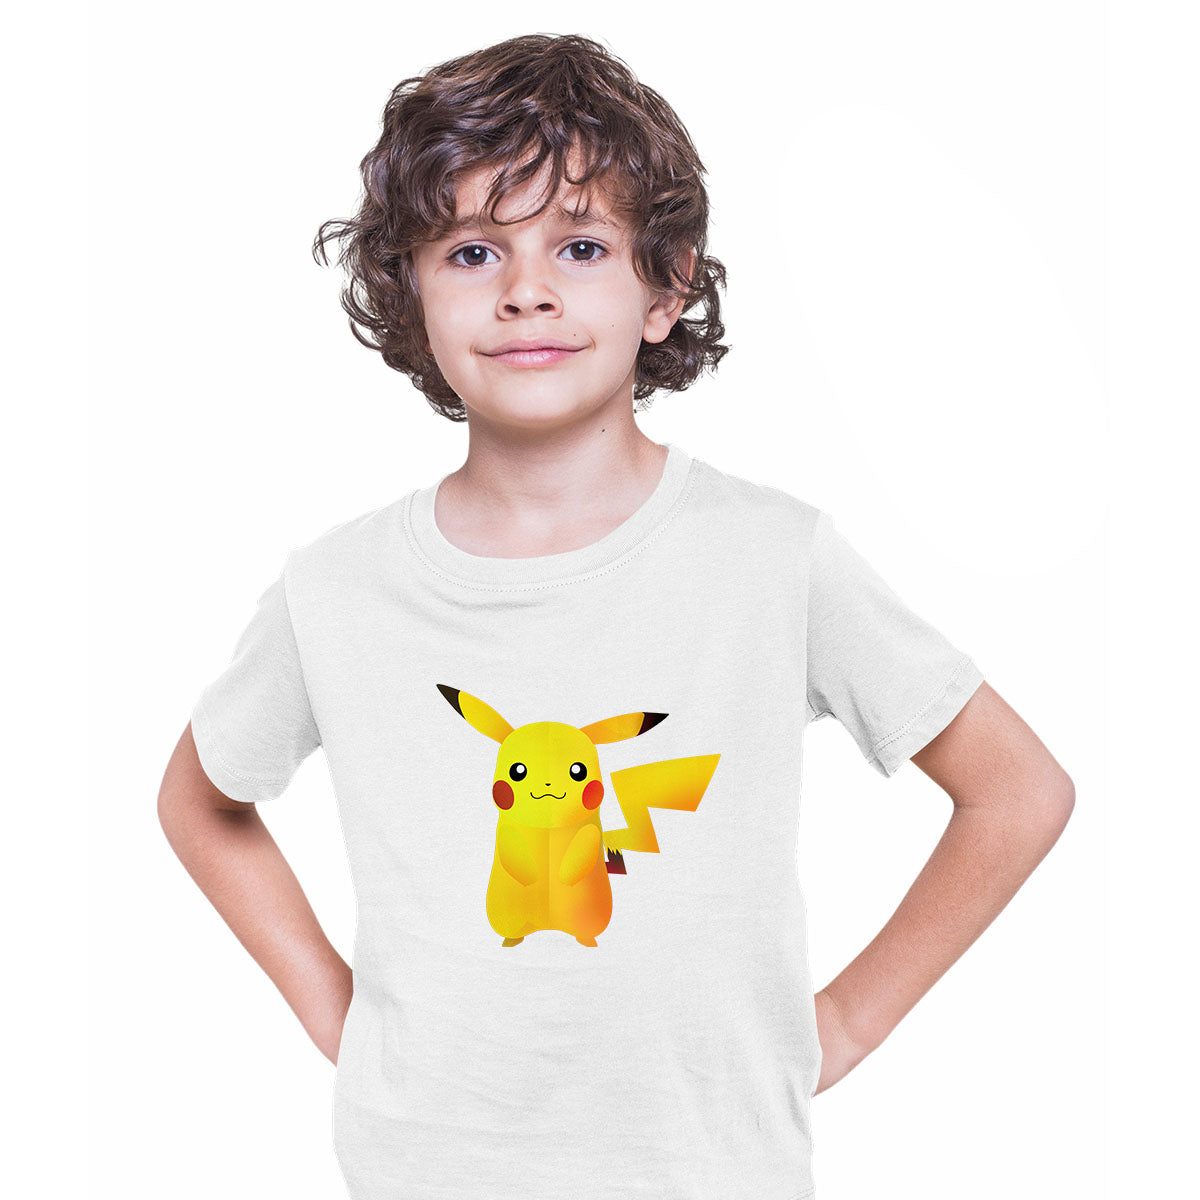 Pikachu Pokemon Go T-shirt for Kids Boys Girls Brand New - Kuzi Tees